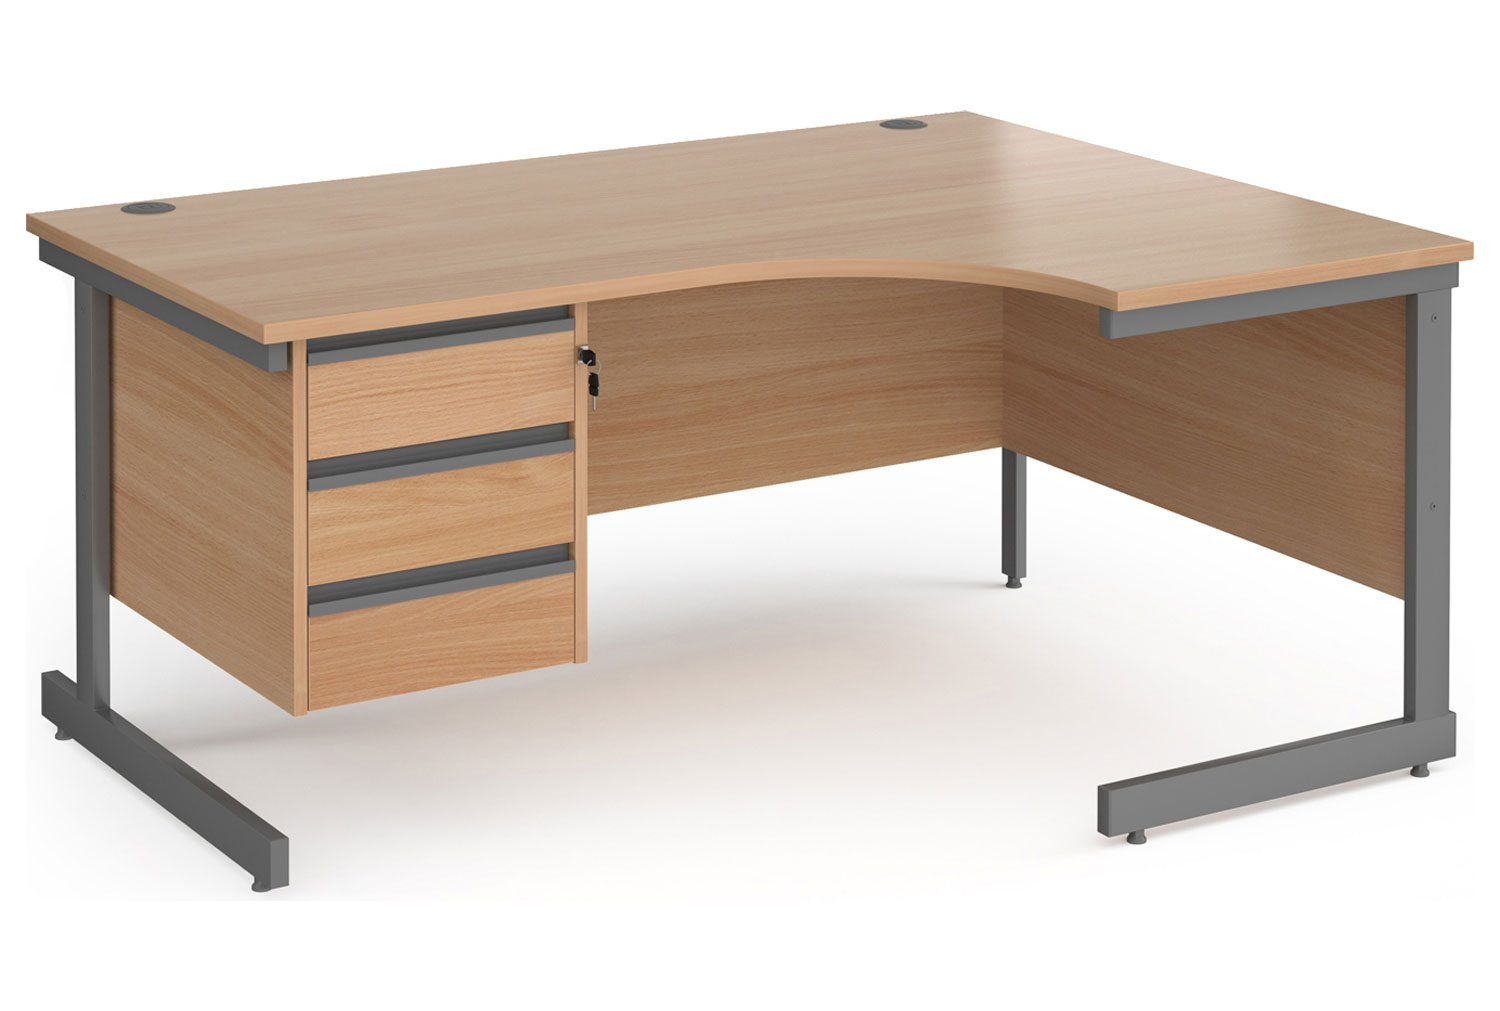 Value Line Classic+ C-Leg Right Ergo Office Desk 3 Drawers (Graphite Leg), 160wx120/80dx73h (cm), Beech